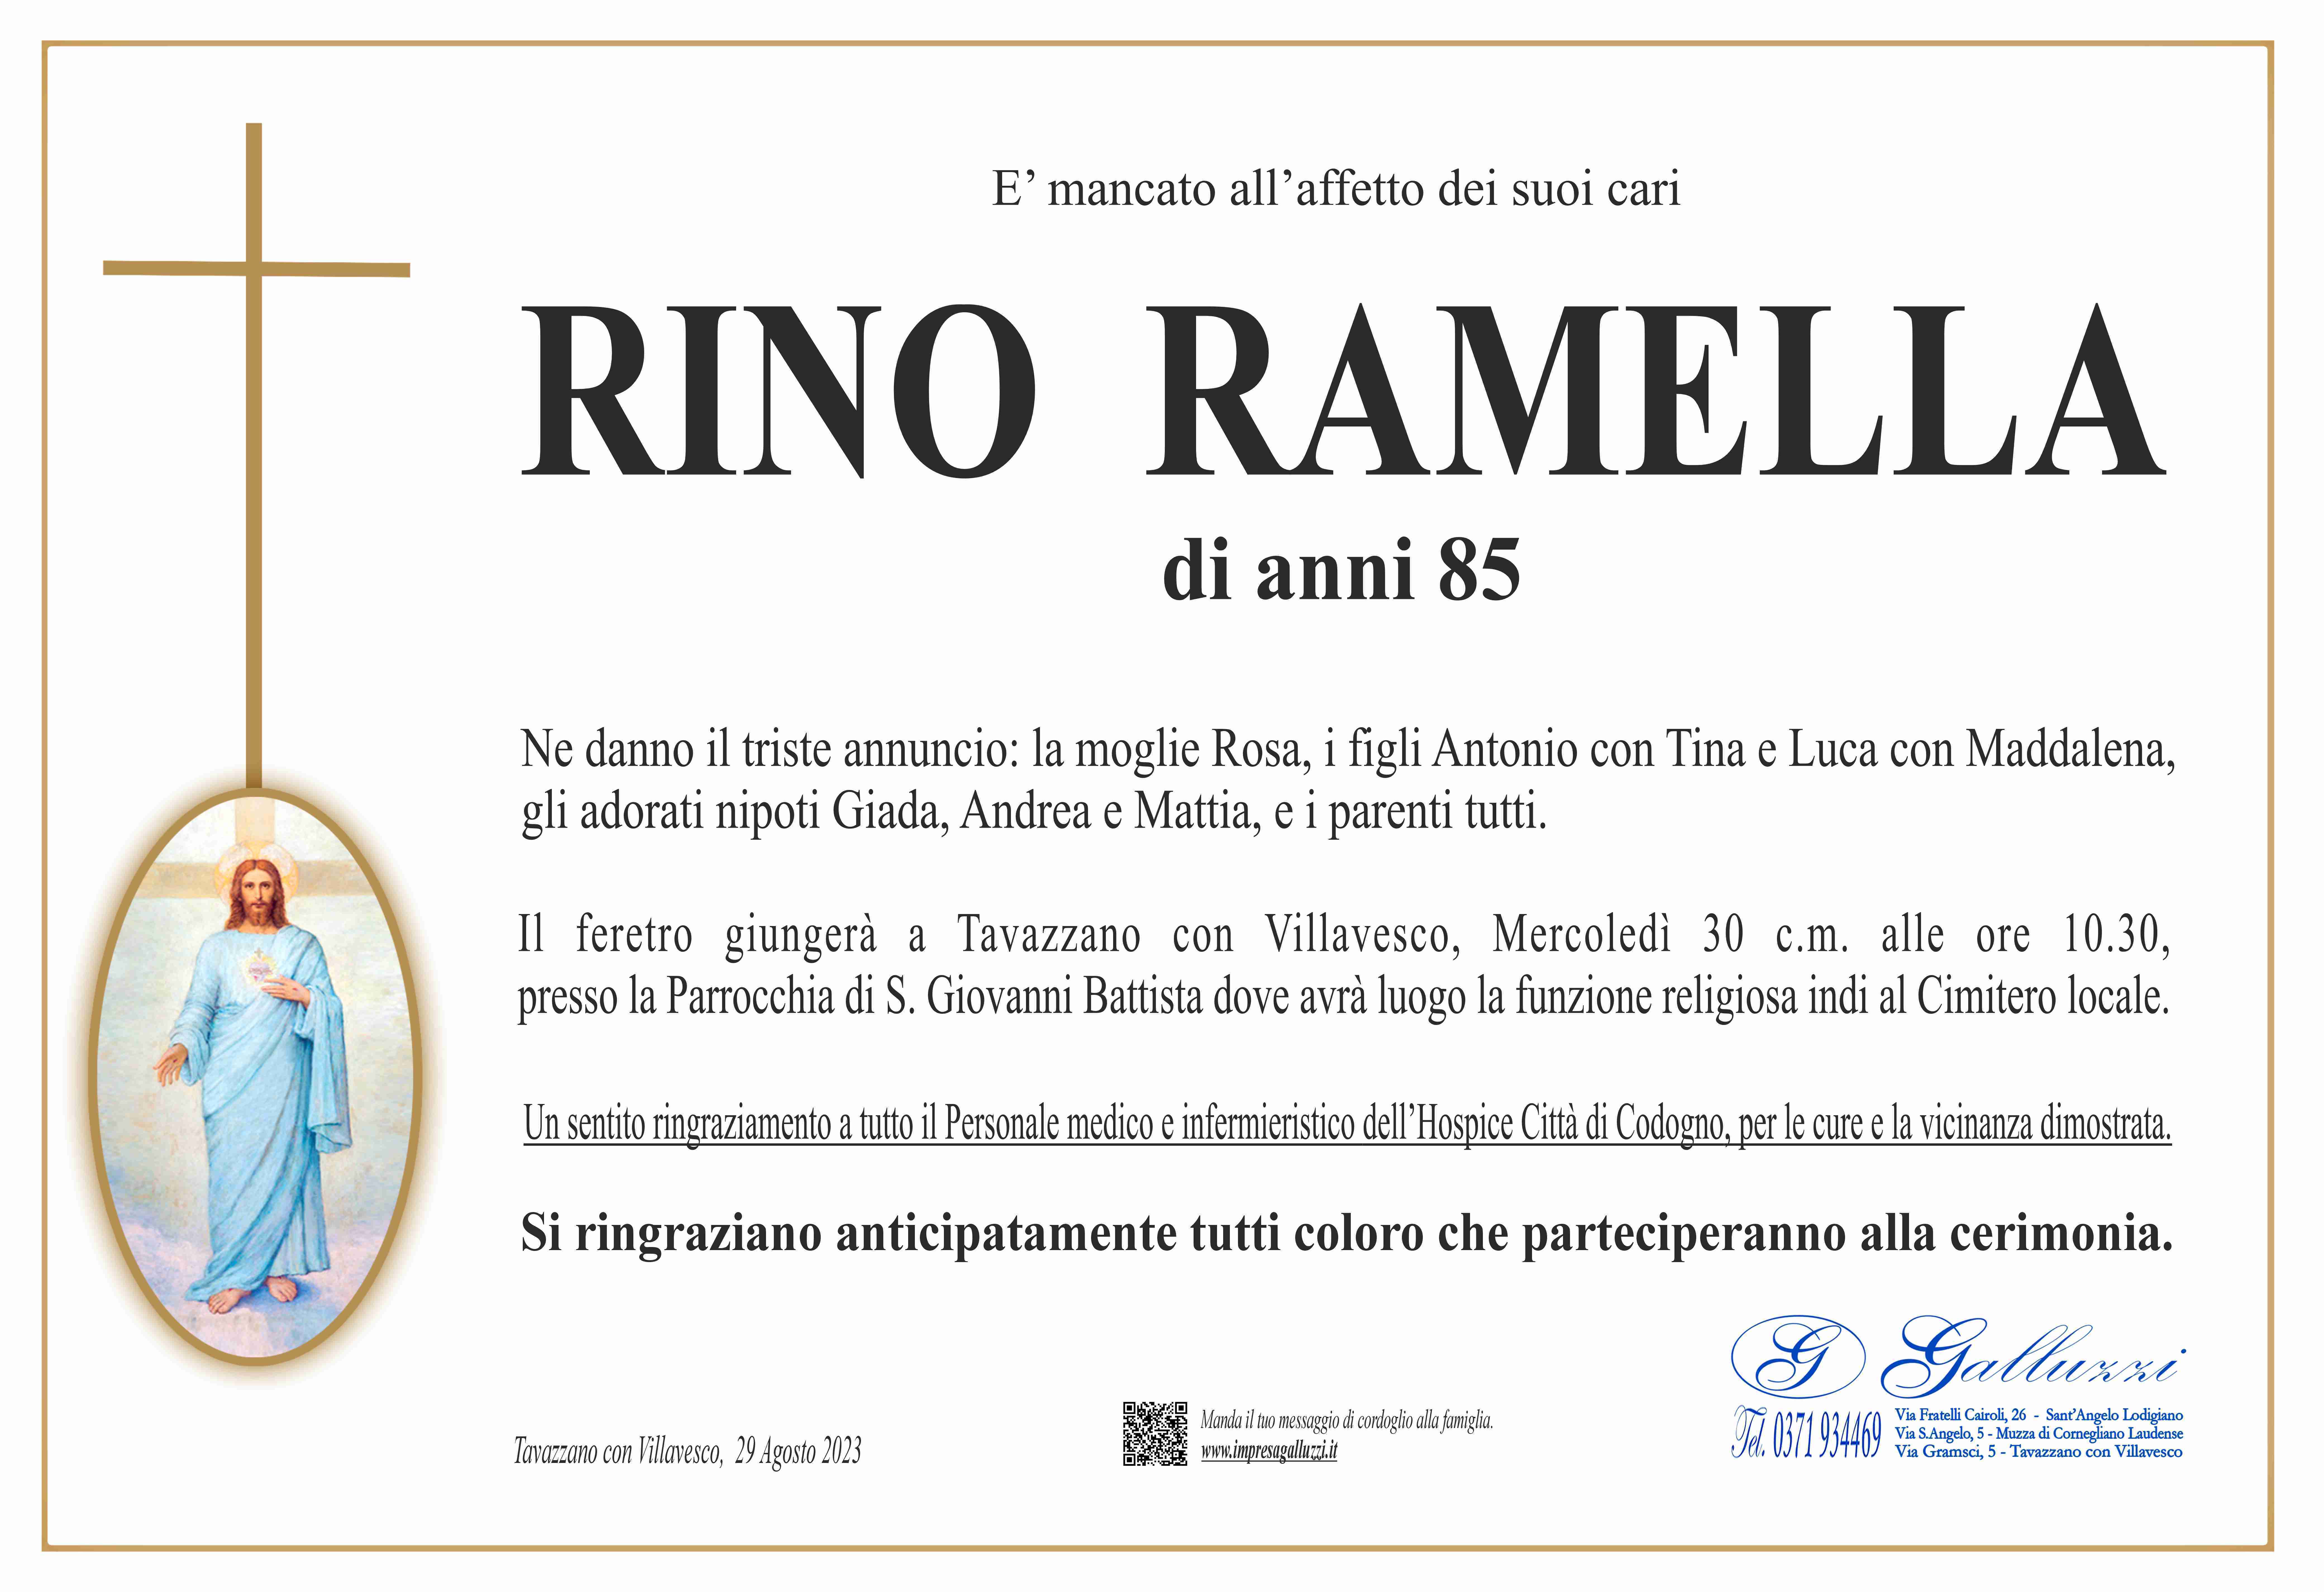 Rino Ramella